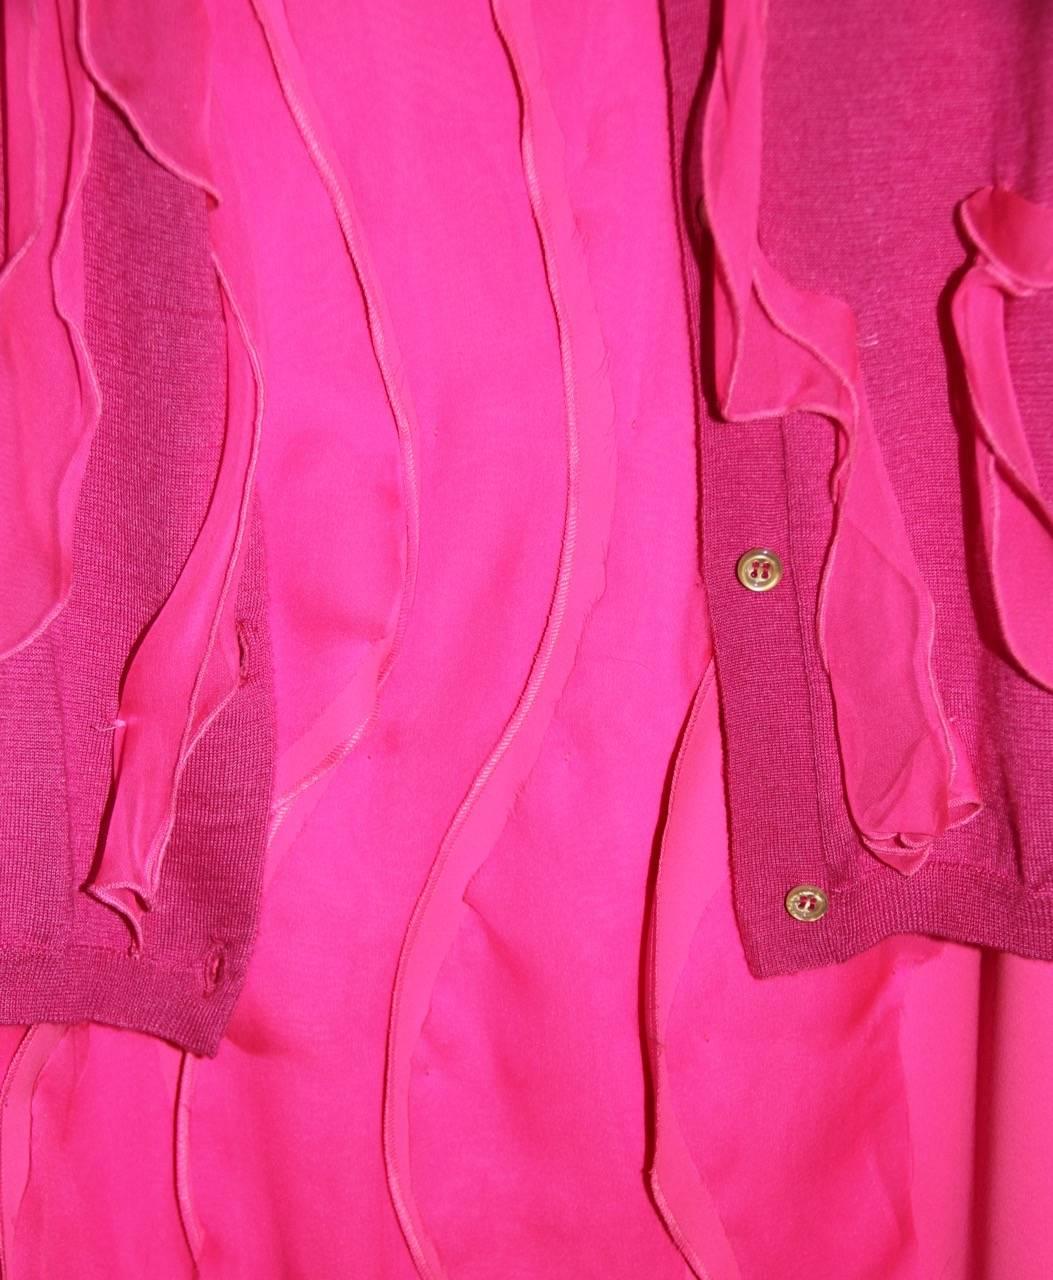 Bottega Veneta Hot Pink Sleeveless Dress - Hot Pink Silk - FR 40 FR  1